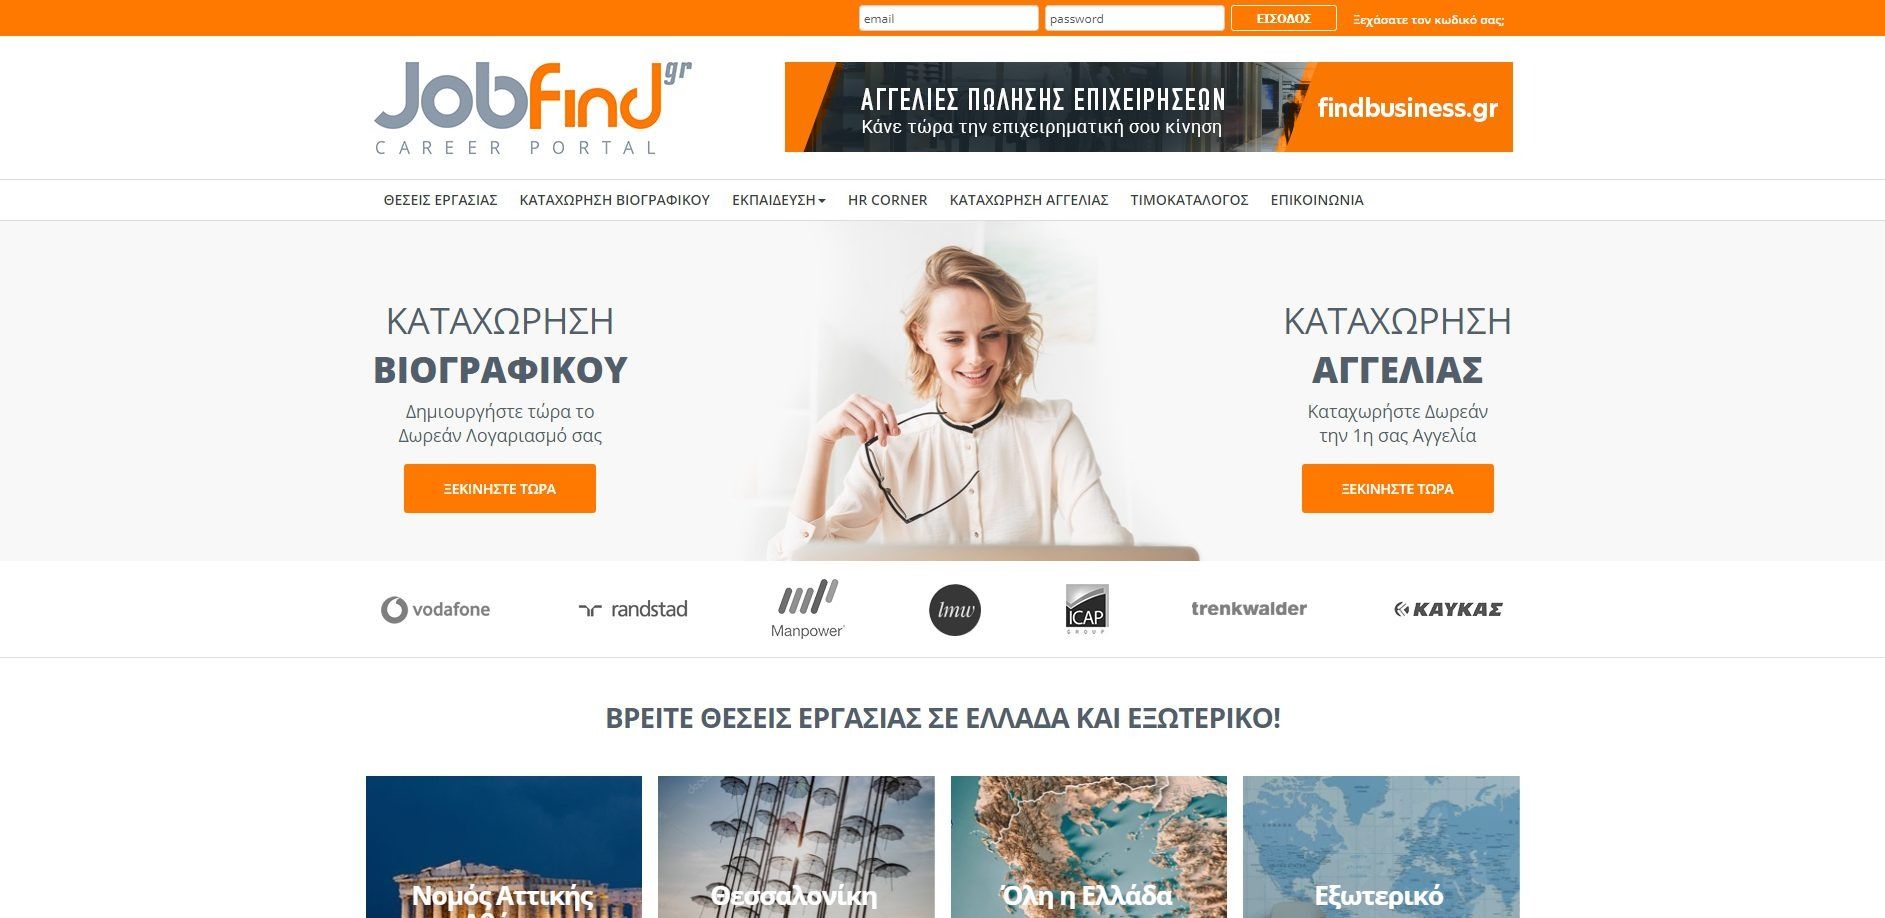 Jobfind - Αναζήτηση εργασίας στην Ελλάδα και το εξωτερικό